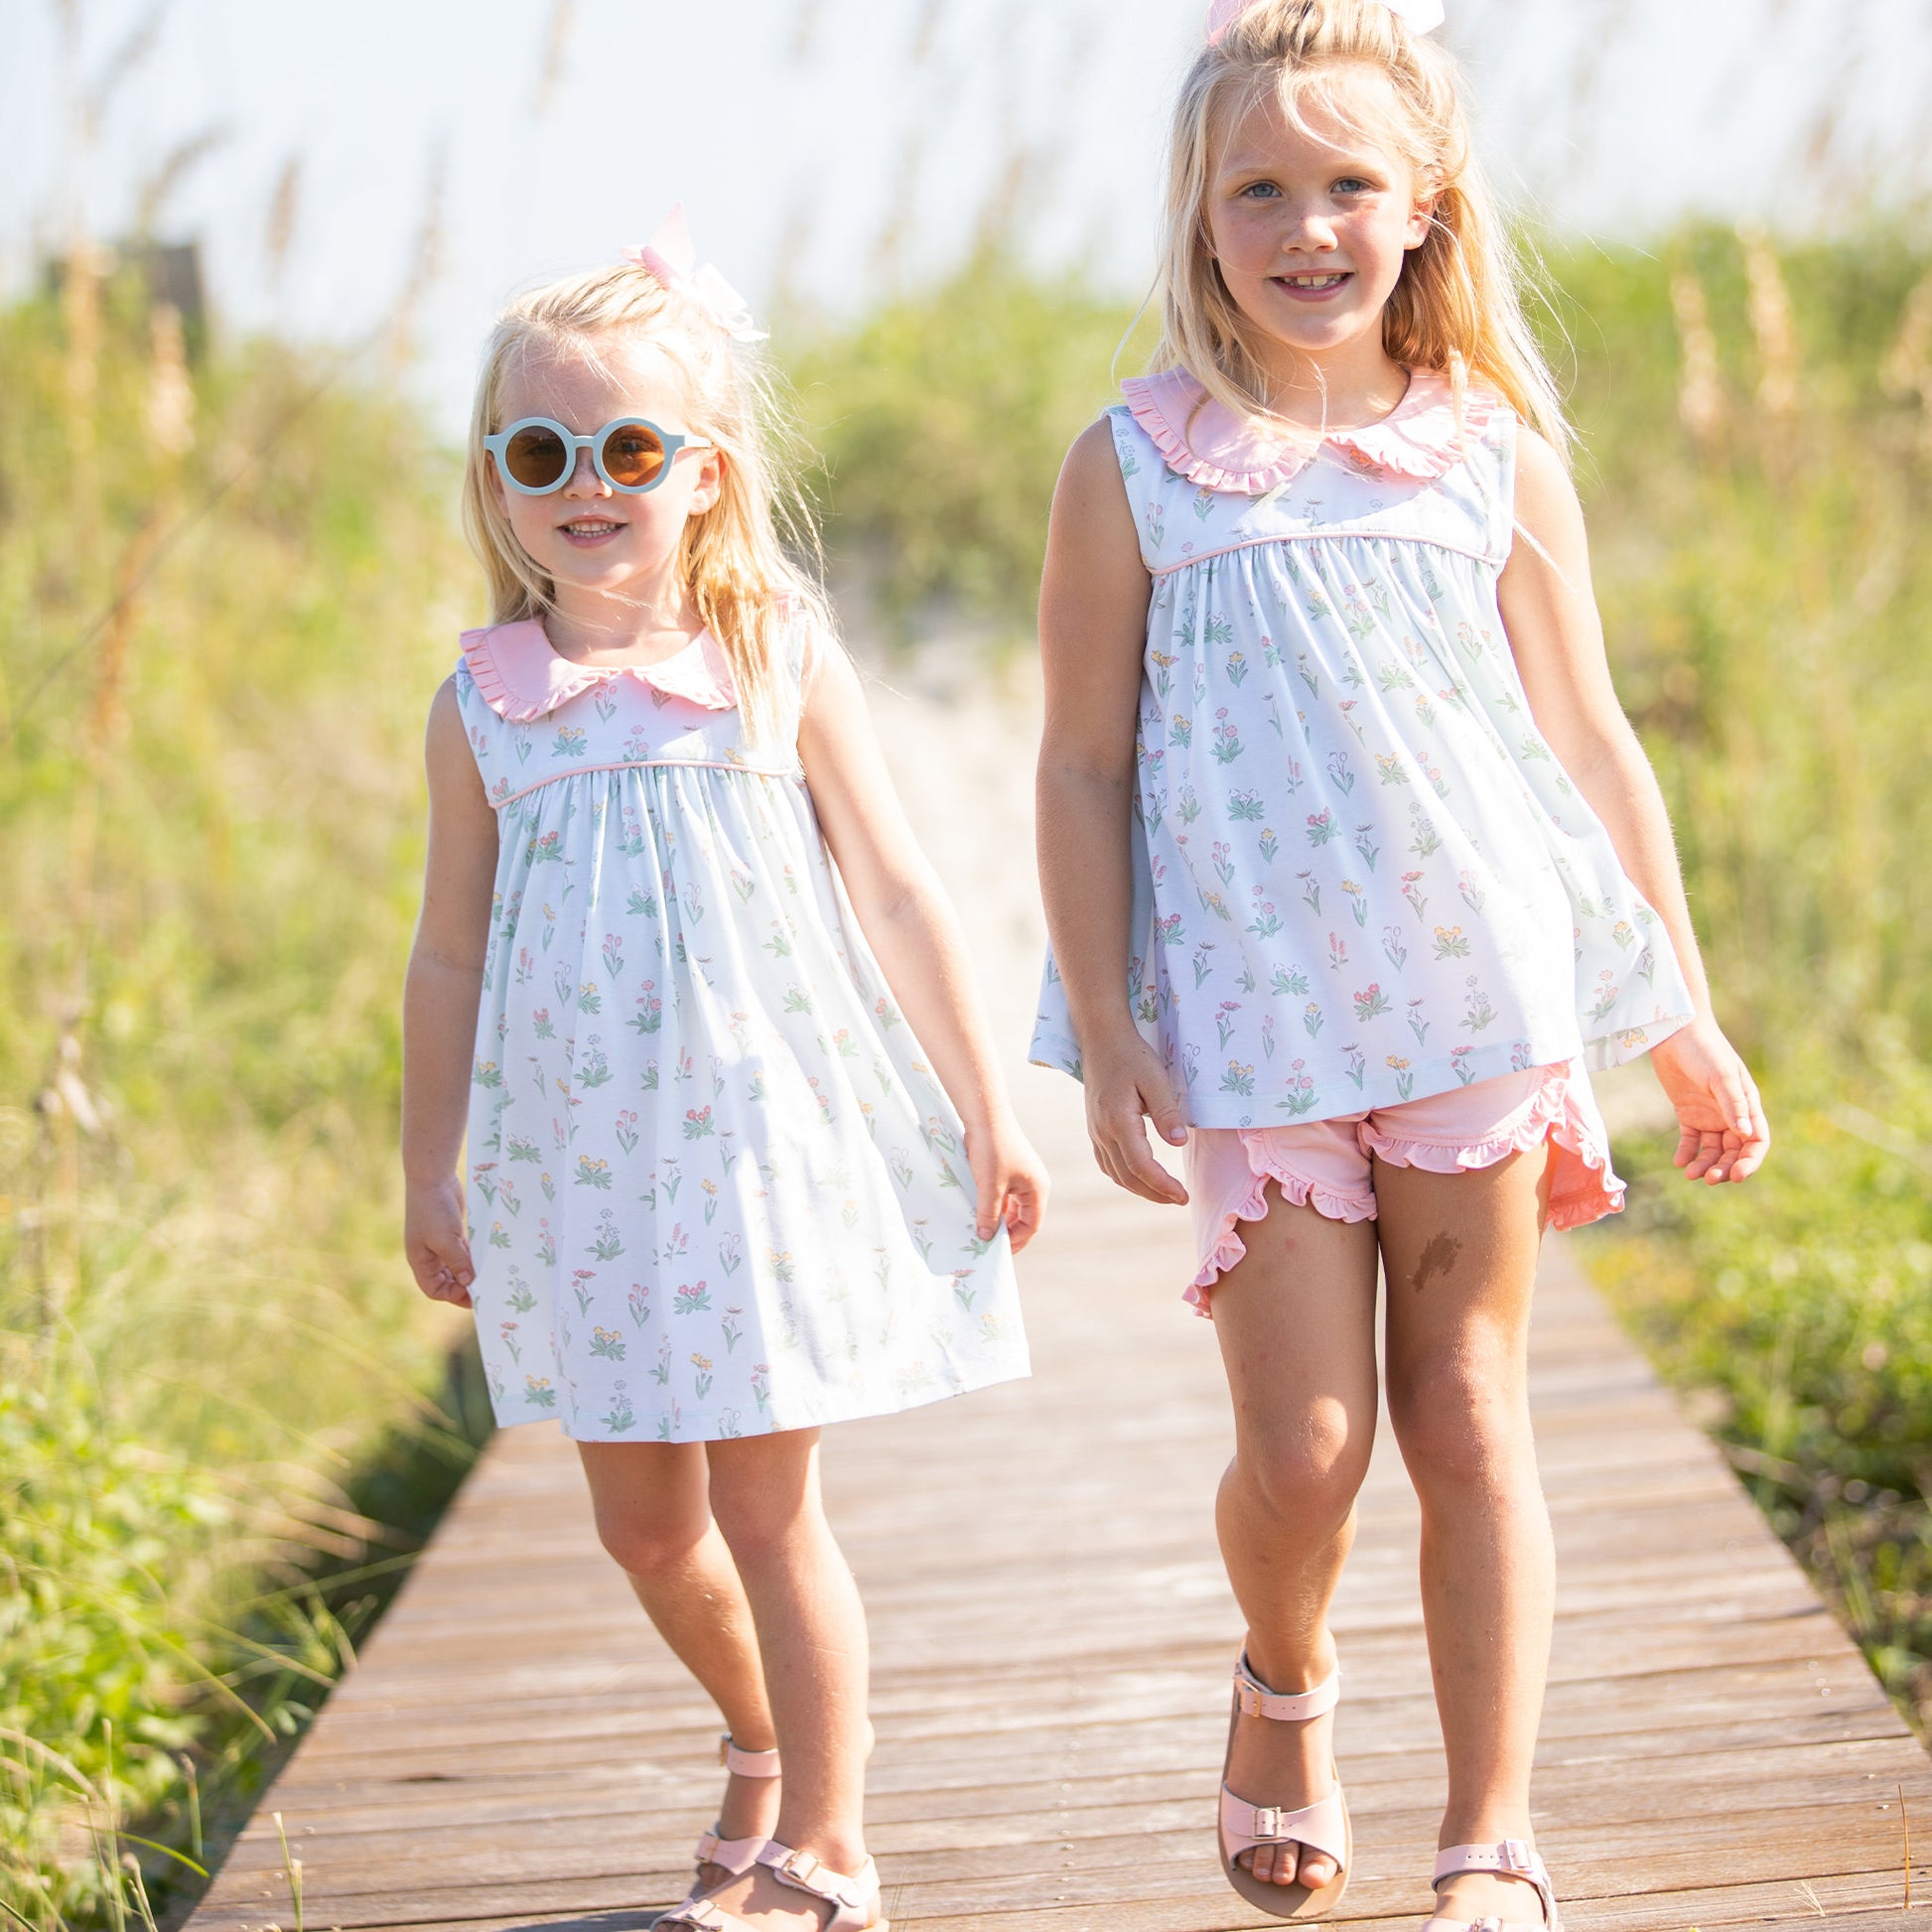 a little girl wearing Girl's Secret Garden Dress walking down the boardwalk with another little girl